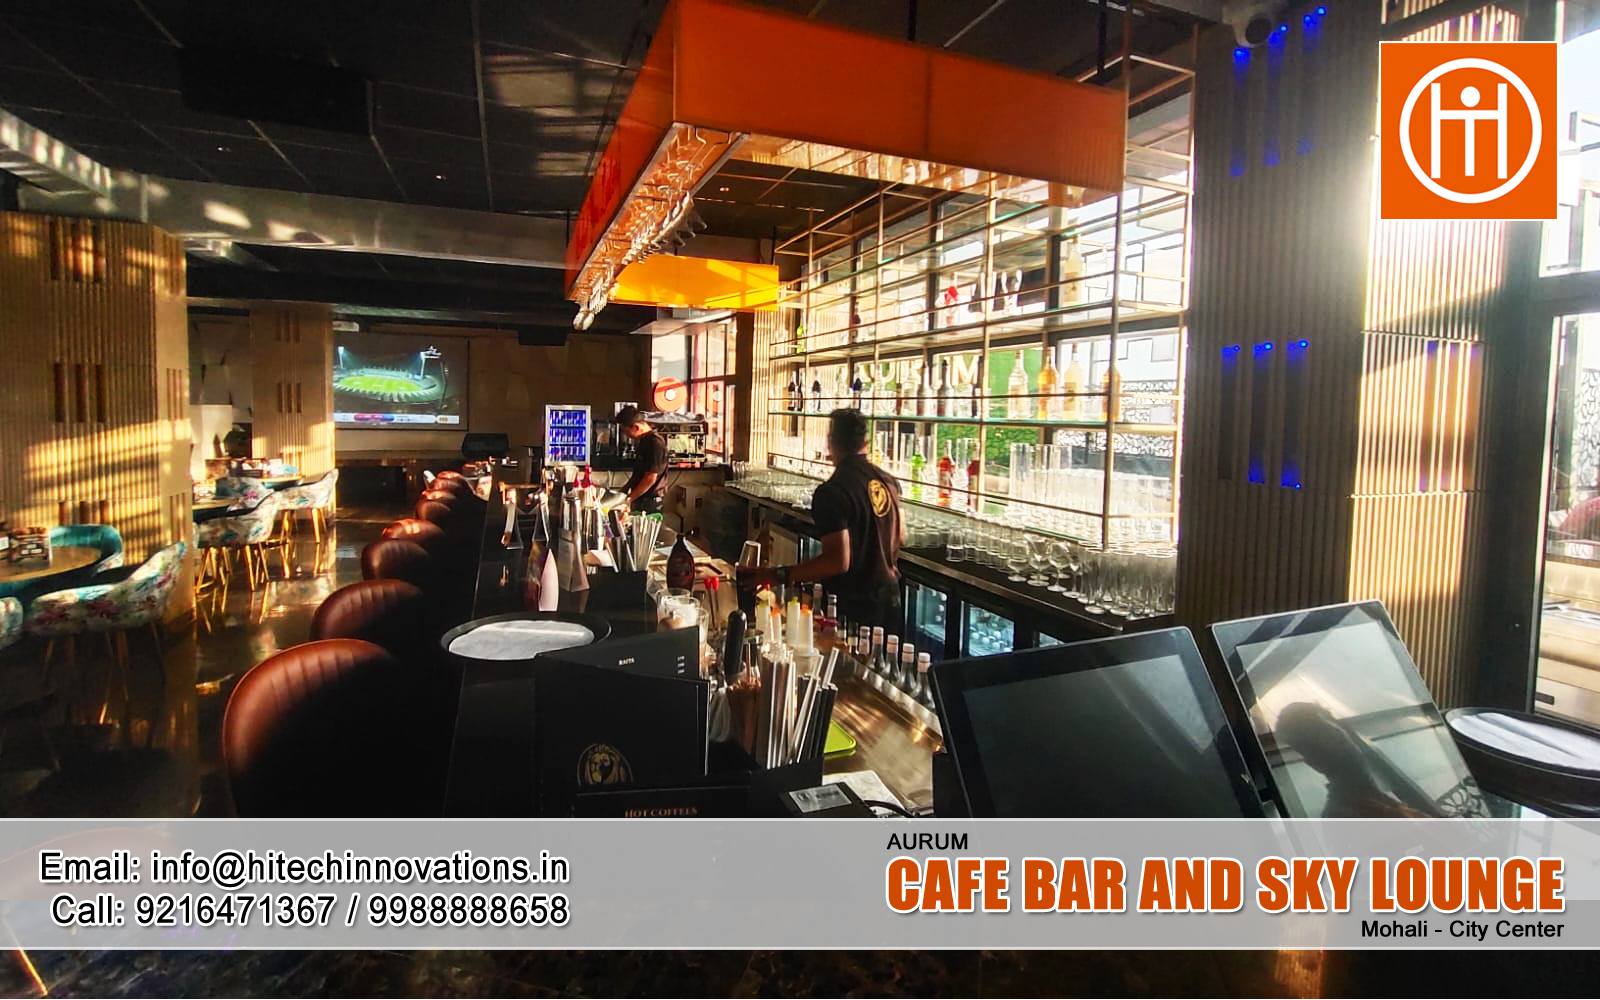 Aurum Cafe Bar and Sky Lounge Mohali